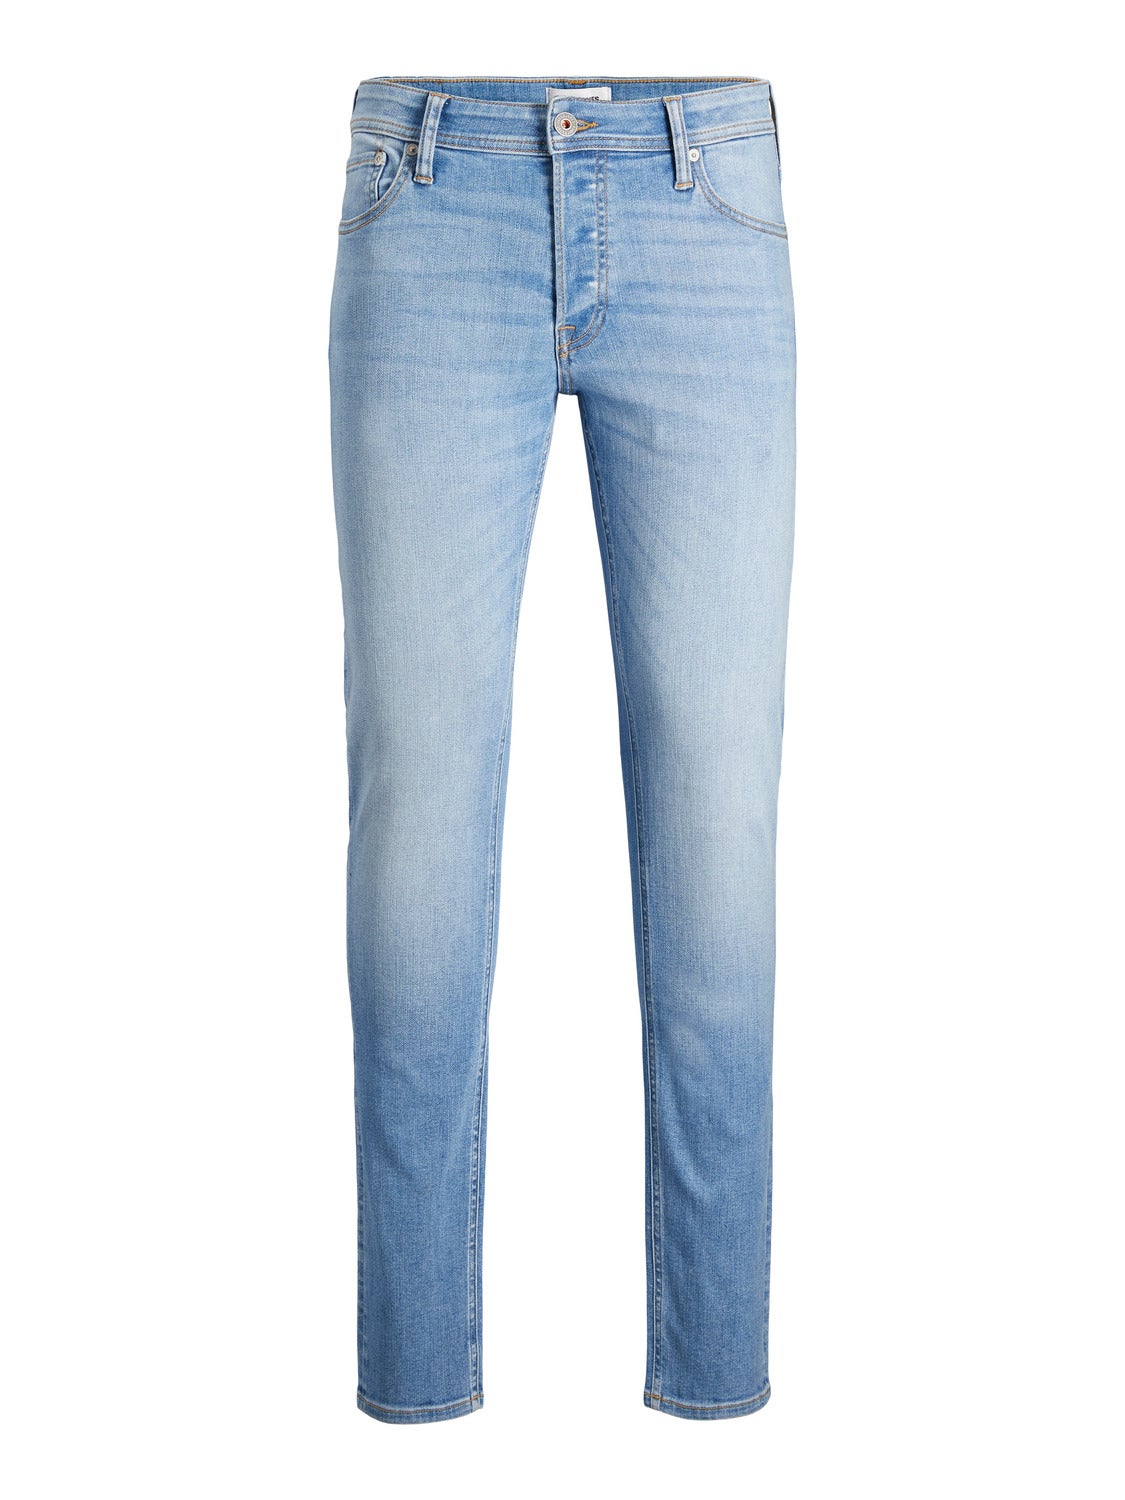 Jack & Jones Boys Jeans Low Rise Skinny Fit Denim Pants for Kids - 8Yrs to  16Yrs | eBay